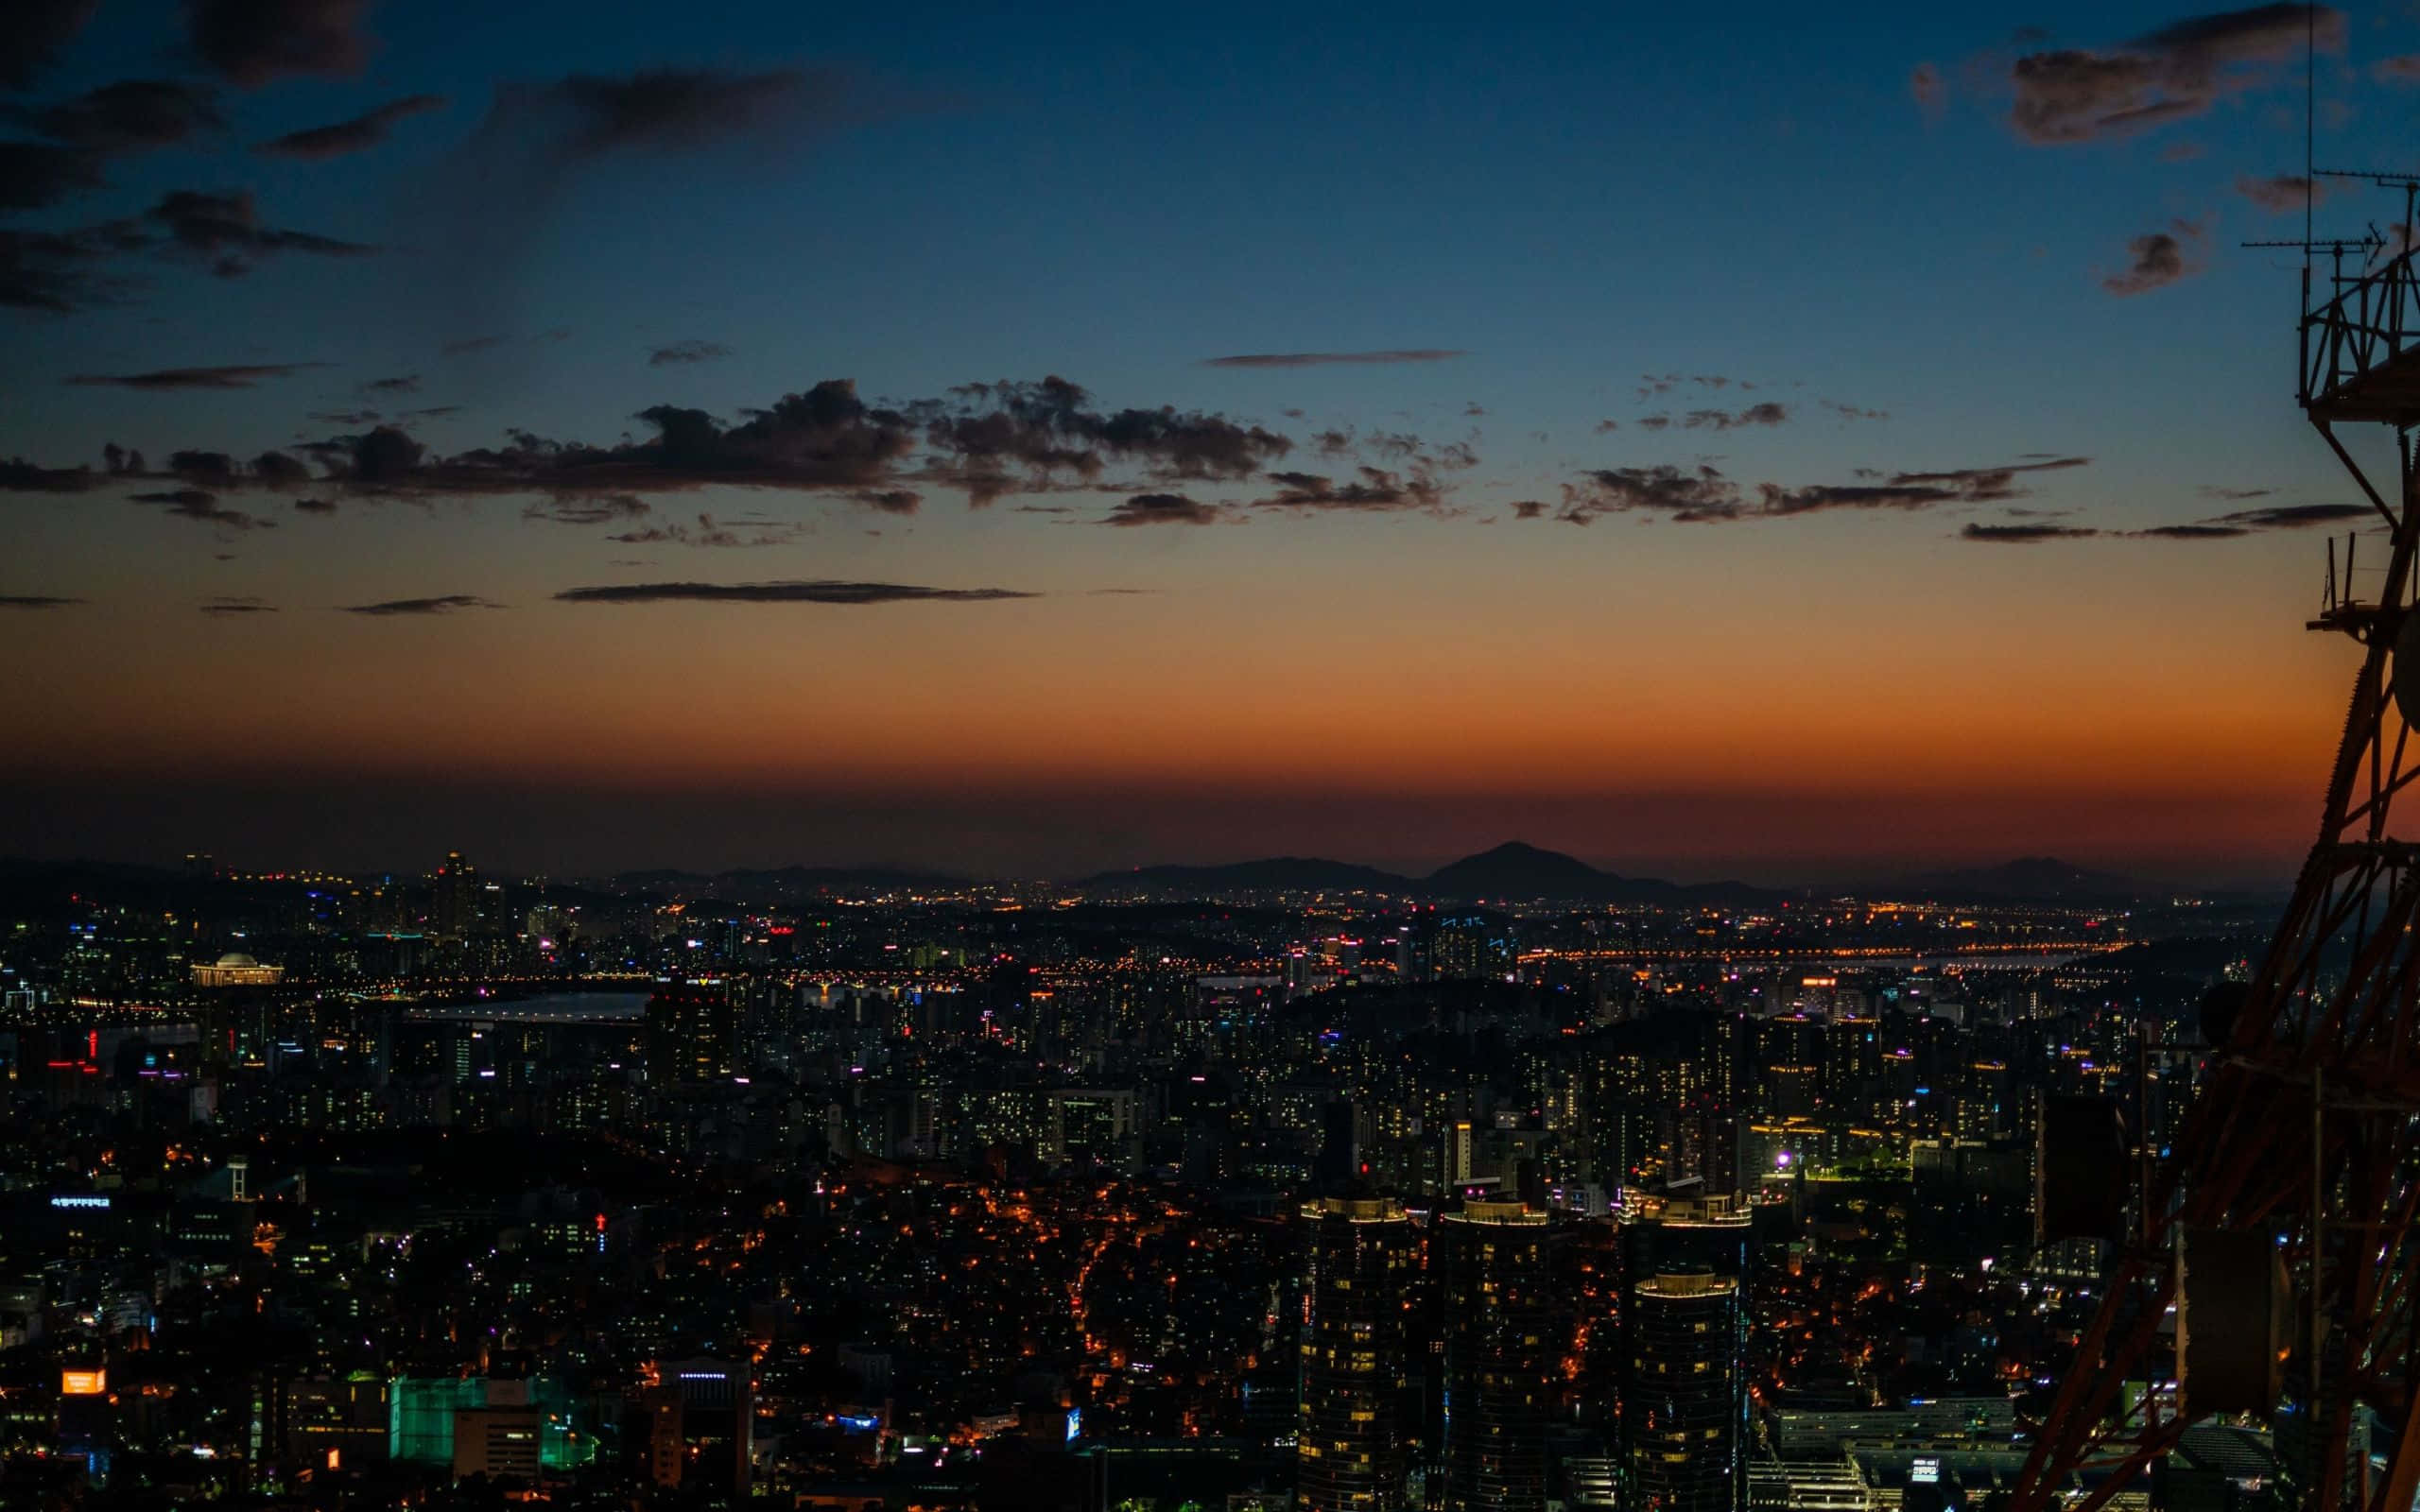 A Korean Street View of a Beautiful City